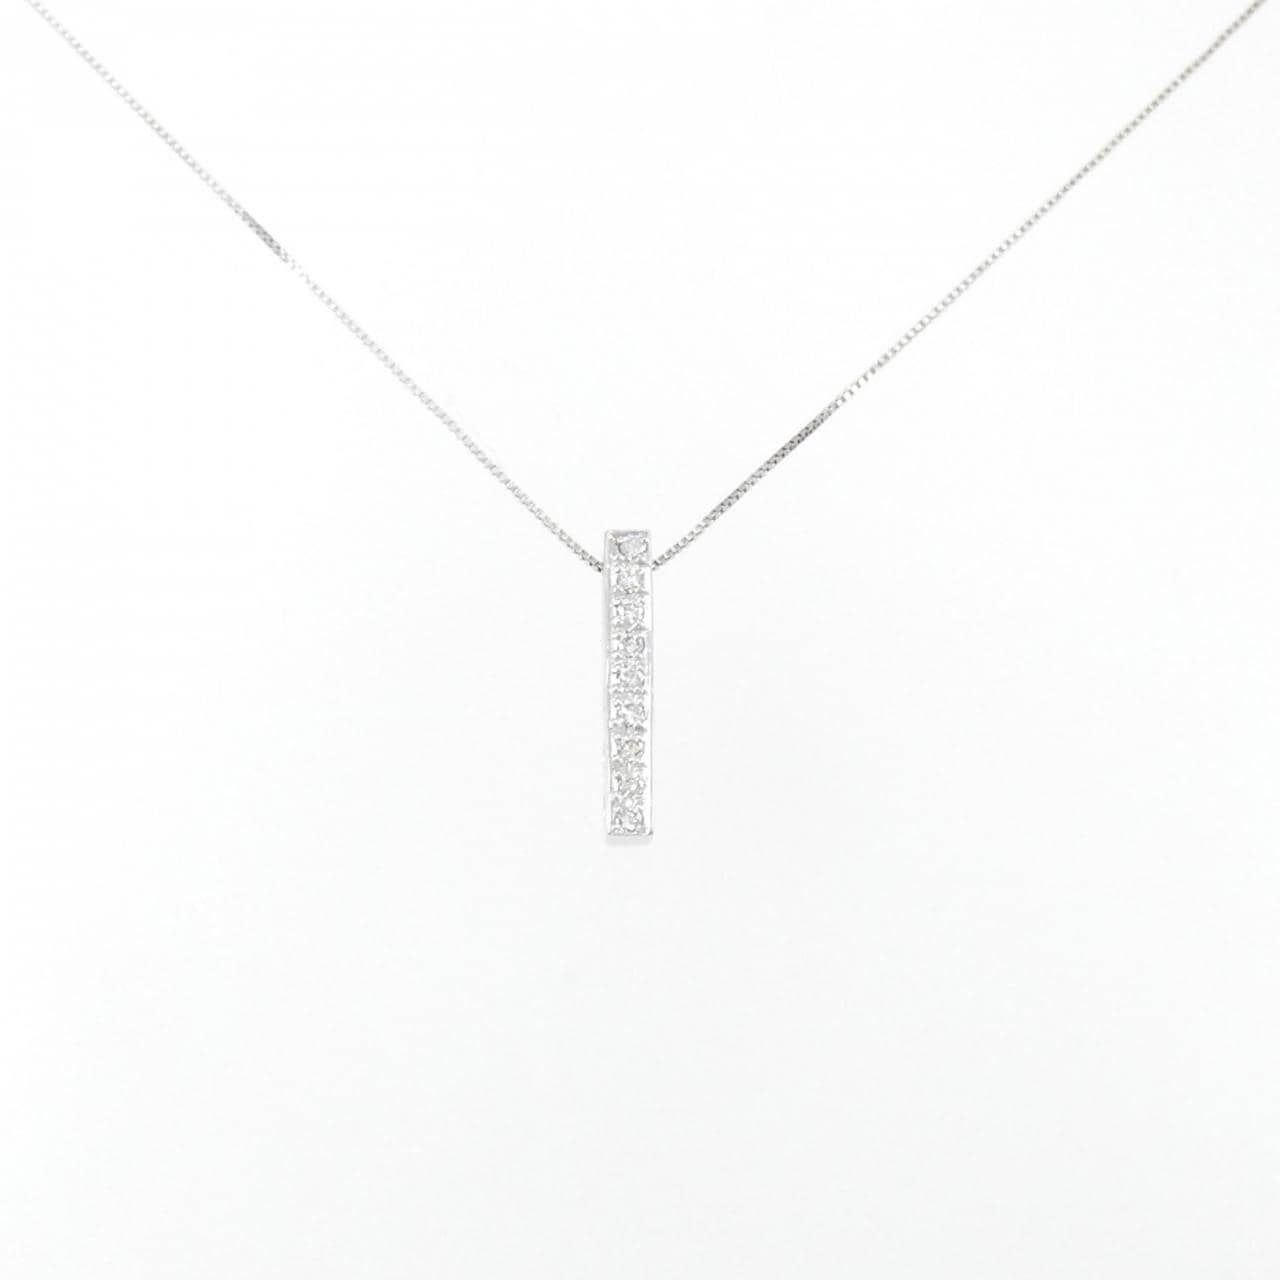 K18WG/750WG Diamond Necklace 0.06CT